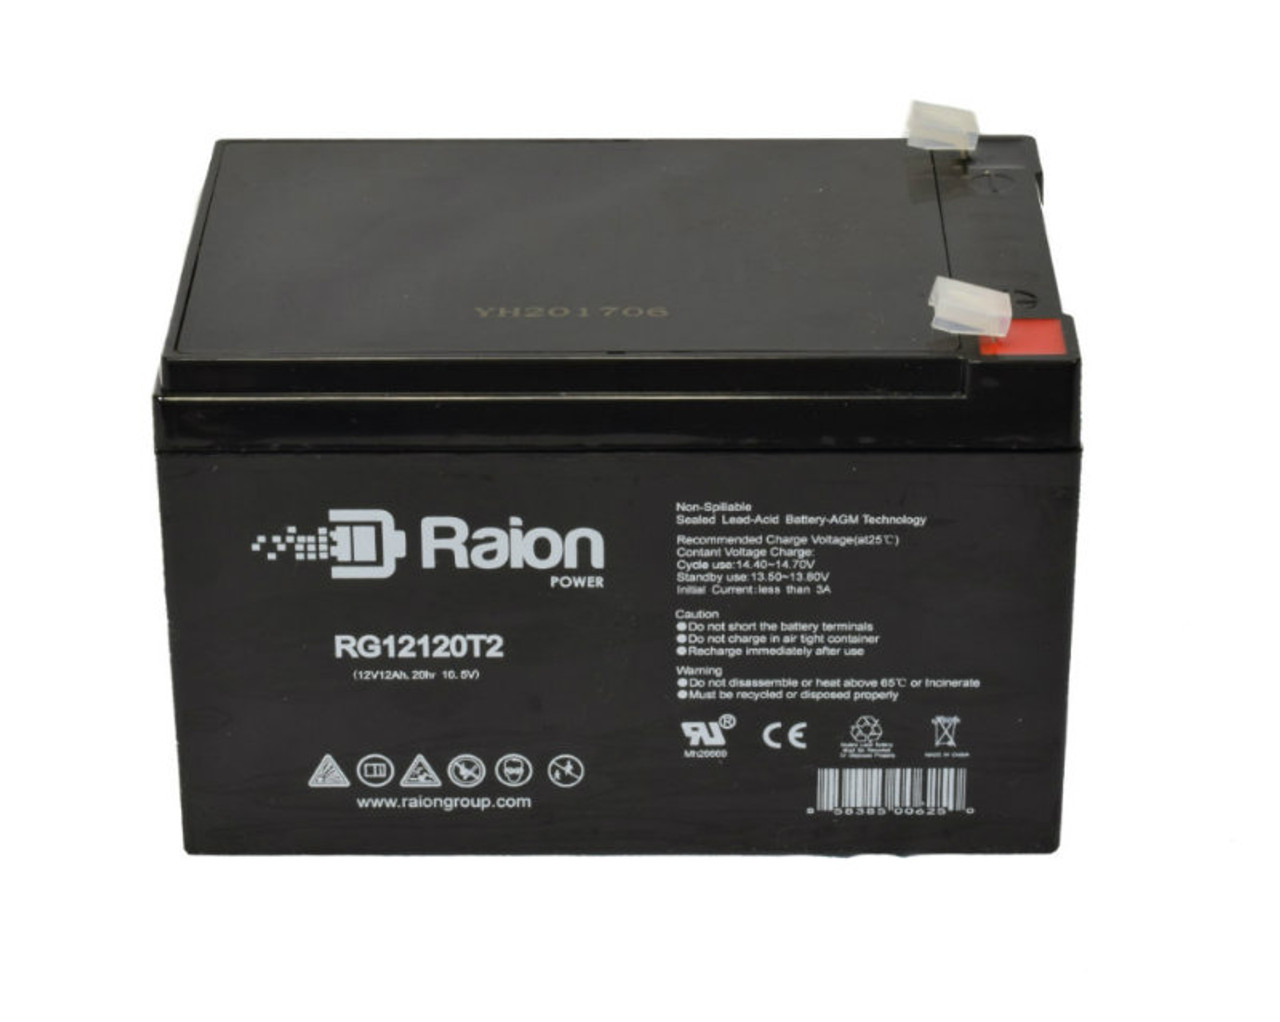 Raion Power RG12120T2 SLA Battery for Rascal Balance 555 (2)